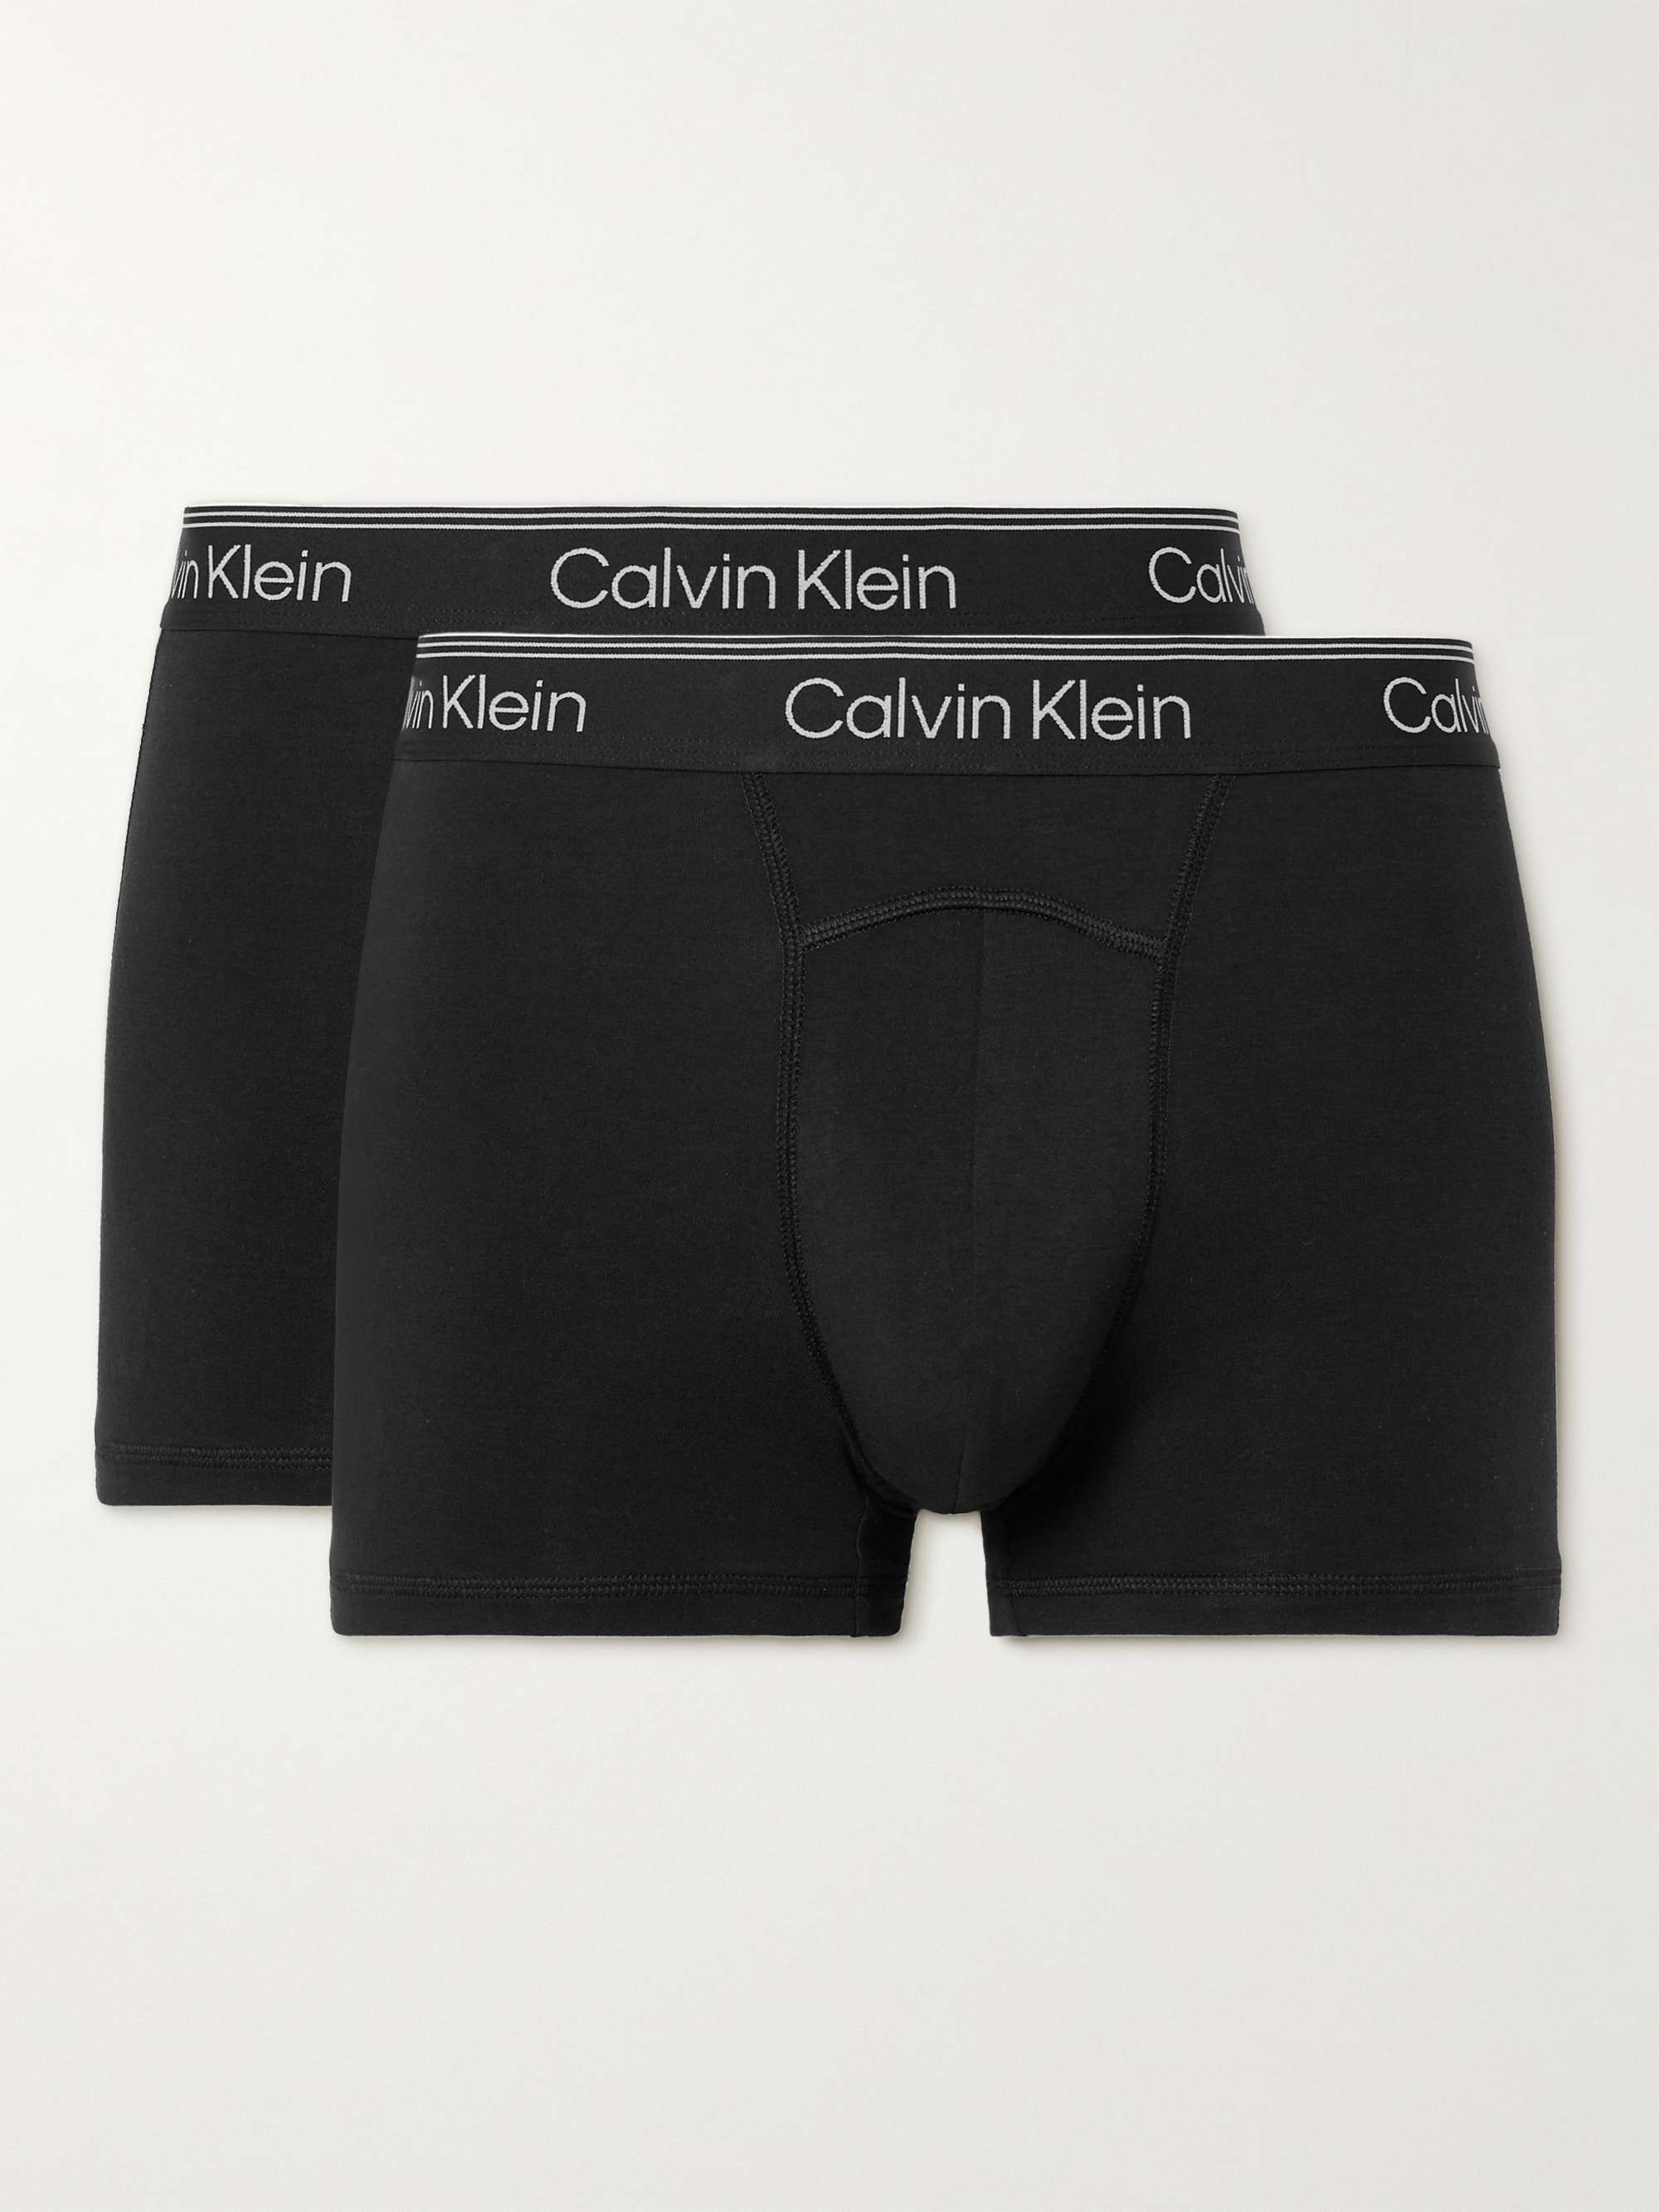 CALVIN KLEIN UNDERWEAR Two-Pack Stretch-Cotton Boxer Trunks for Men